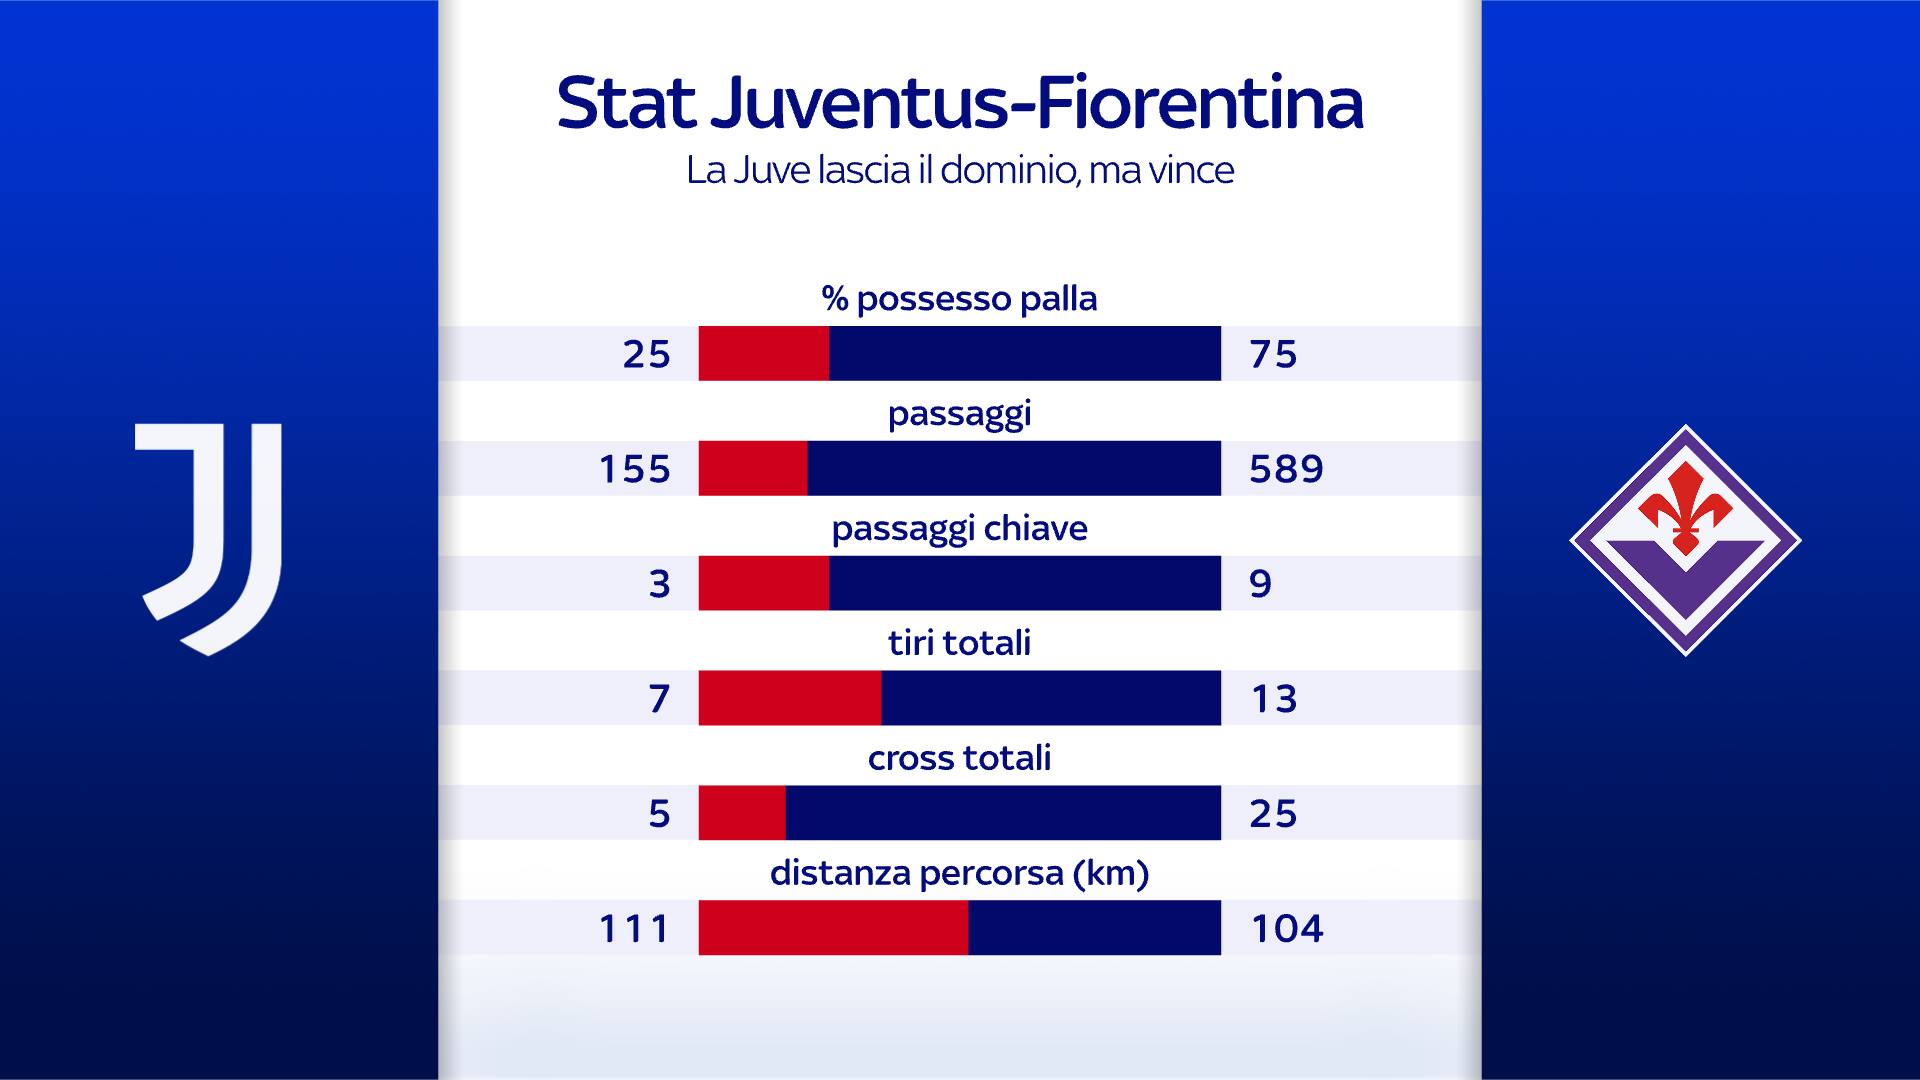 Juve-Fiorentina - Figure 2